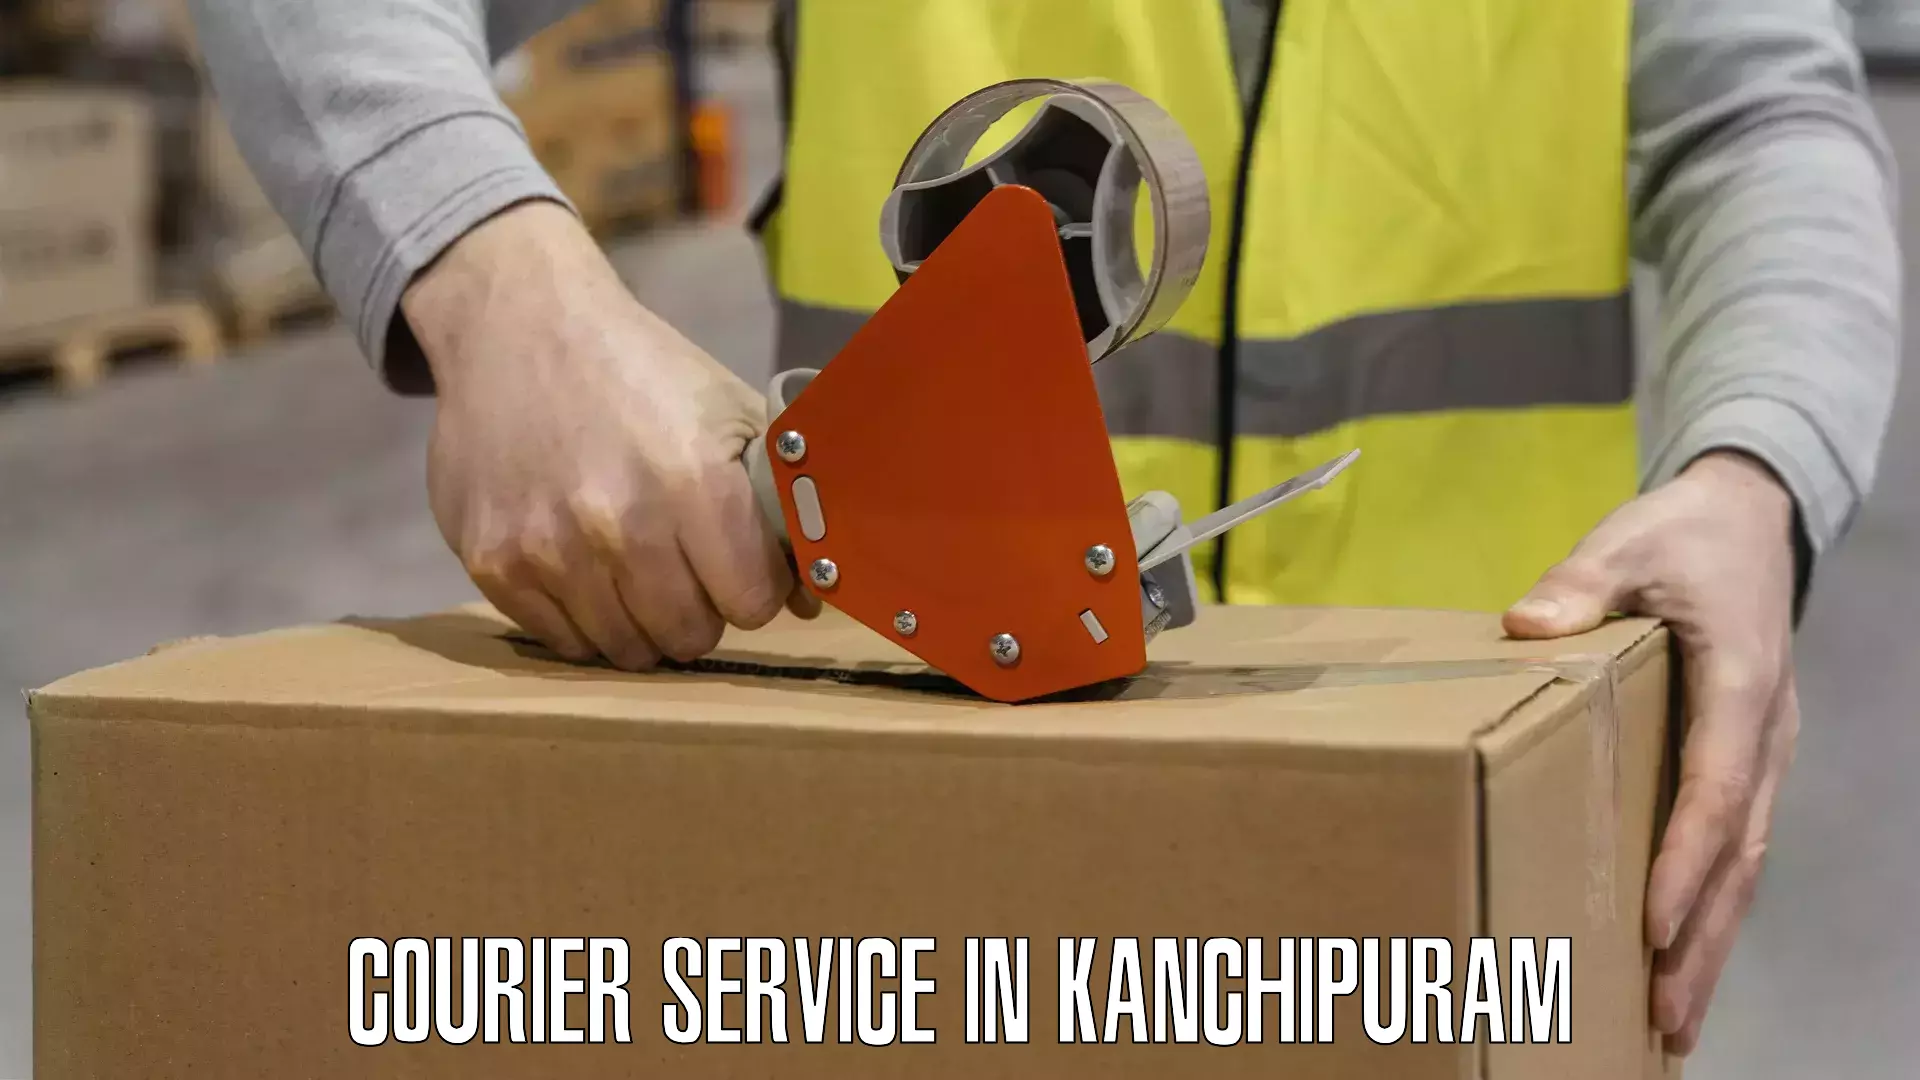 Customizable delivery plans in Kanchipuram